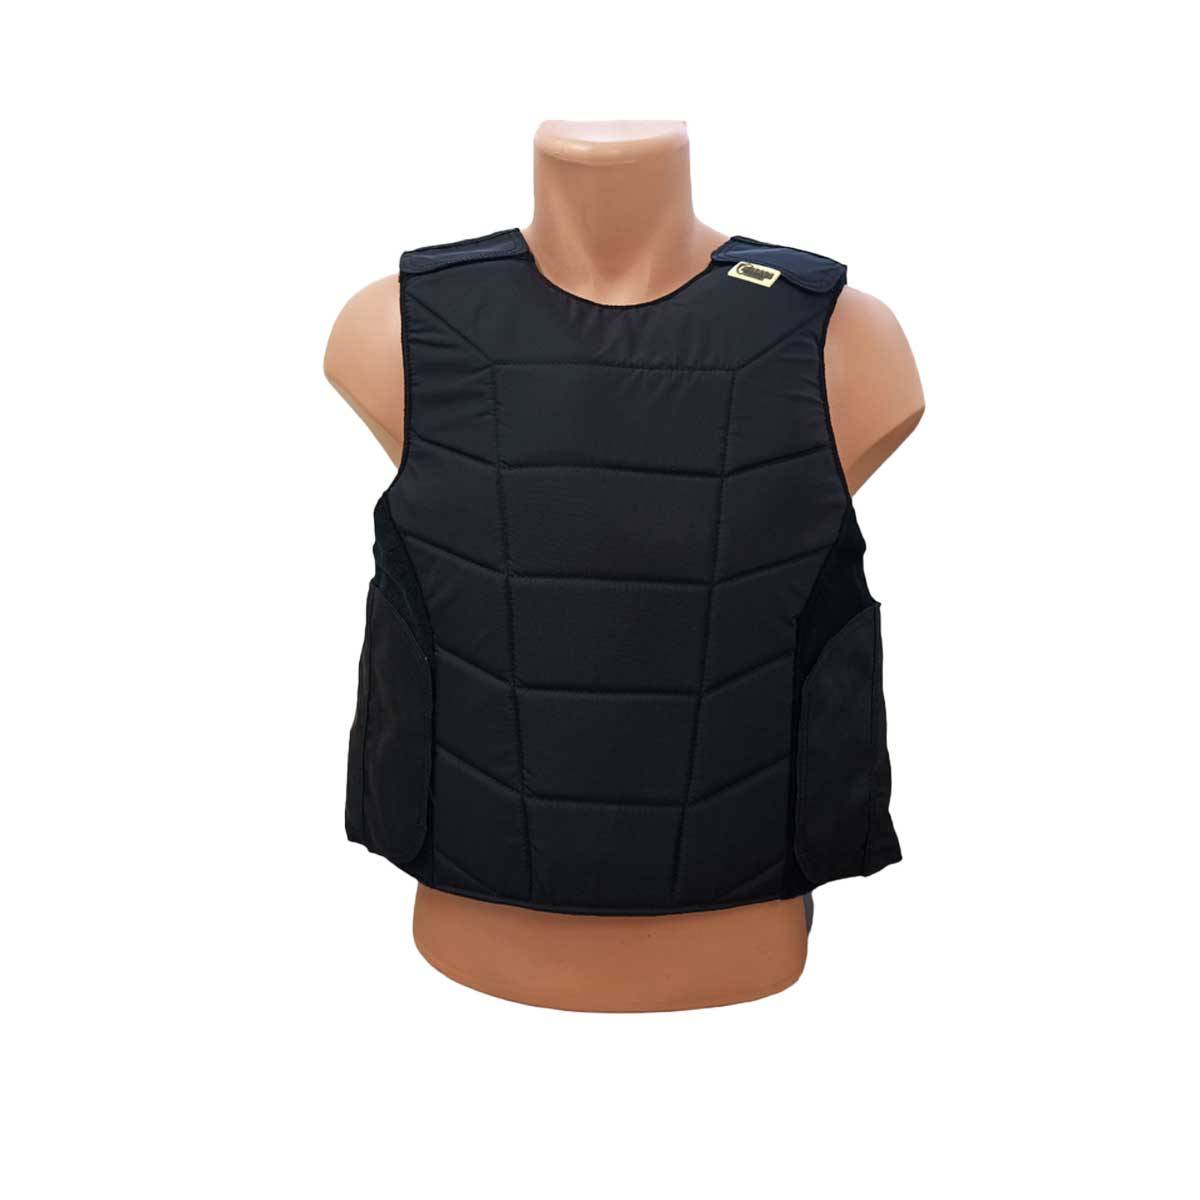 Bullet and stab-resistant vest, NIJ 3A